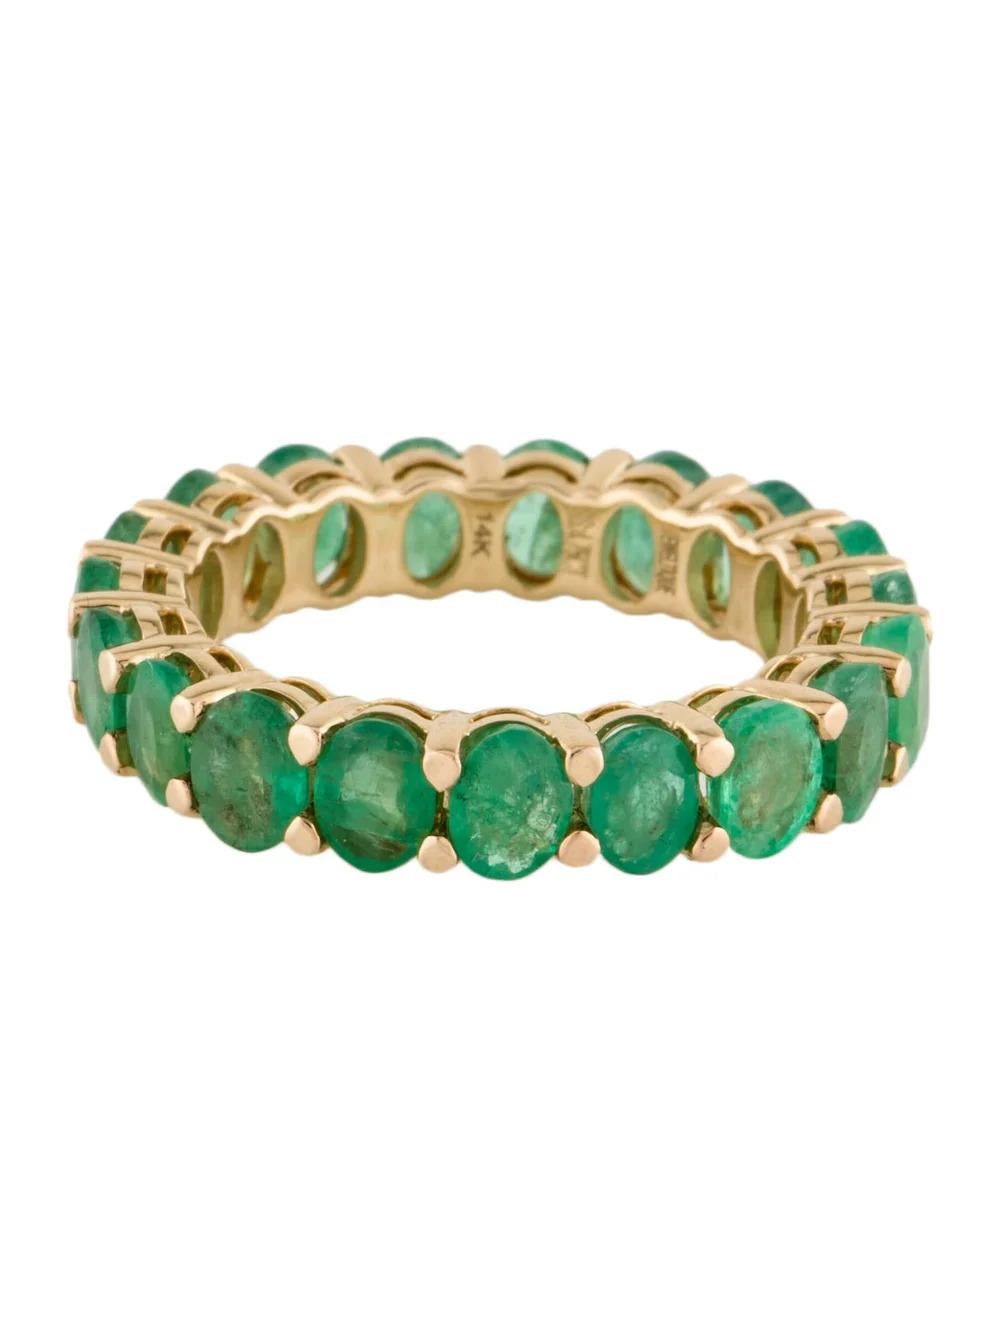 Oval Cut Designer 14K Emerald Eternity Band Ring - 3.69ctw, Size 7, Green Gemstone Design For Sale